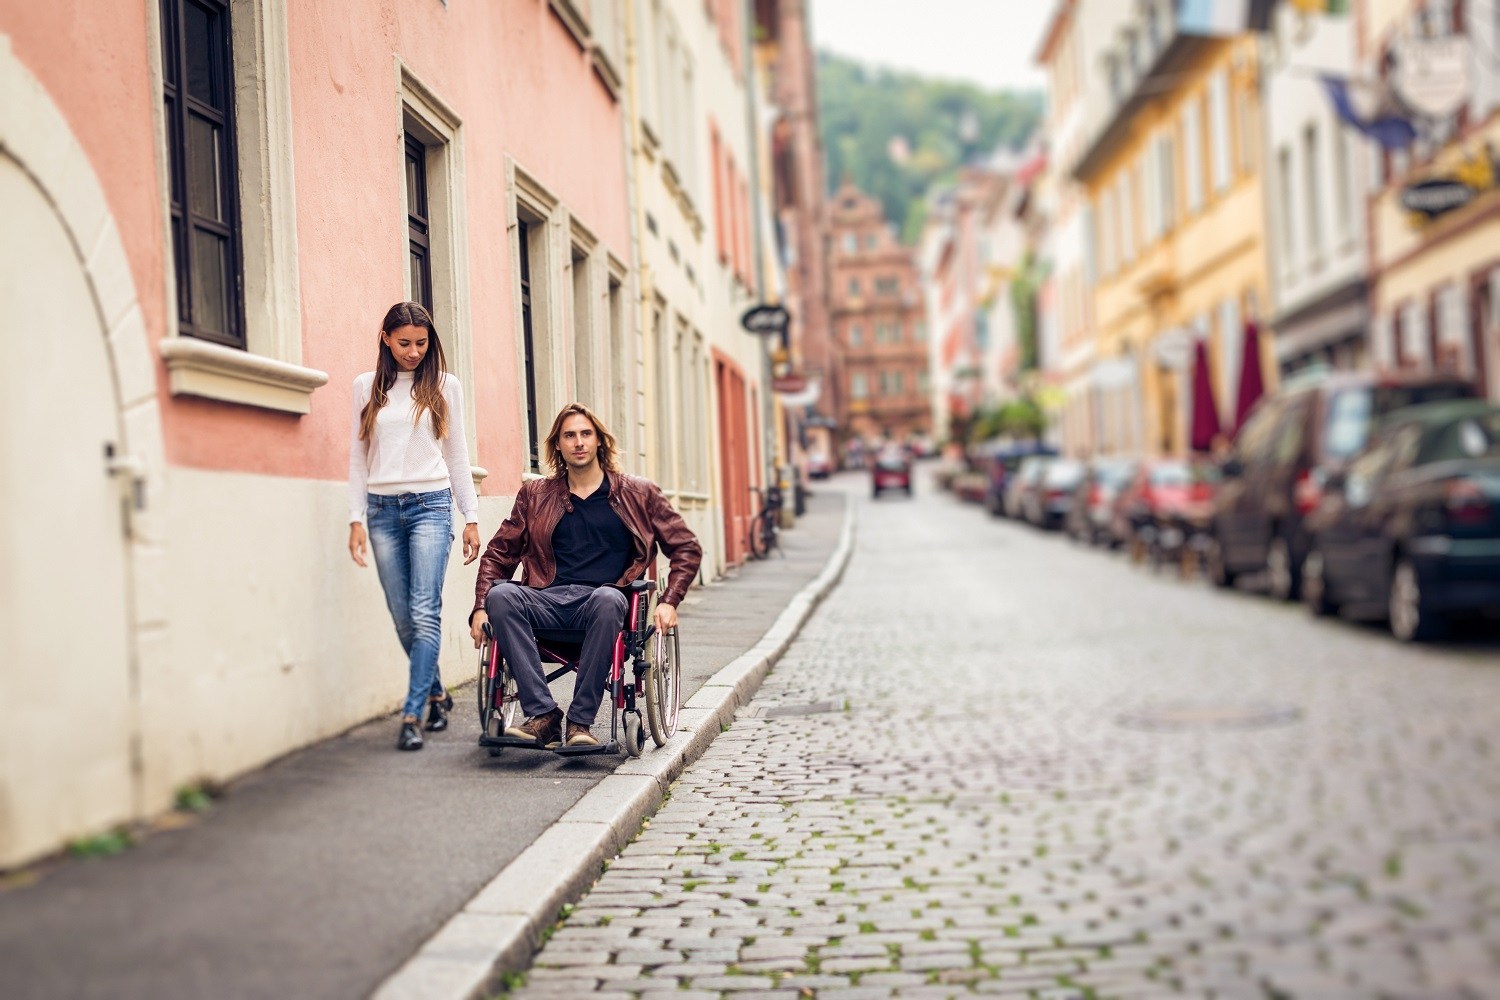 A man in wheelchair on sidewalk with a woman walking beside him